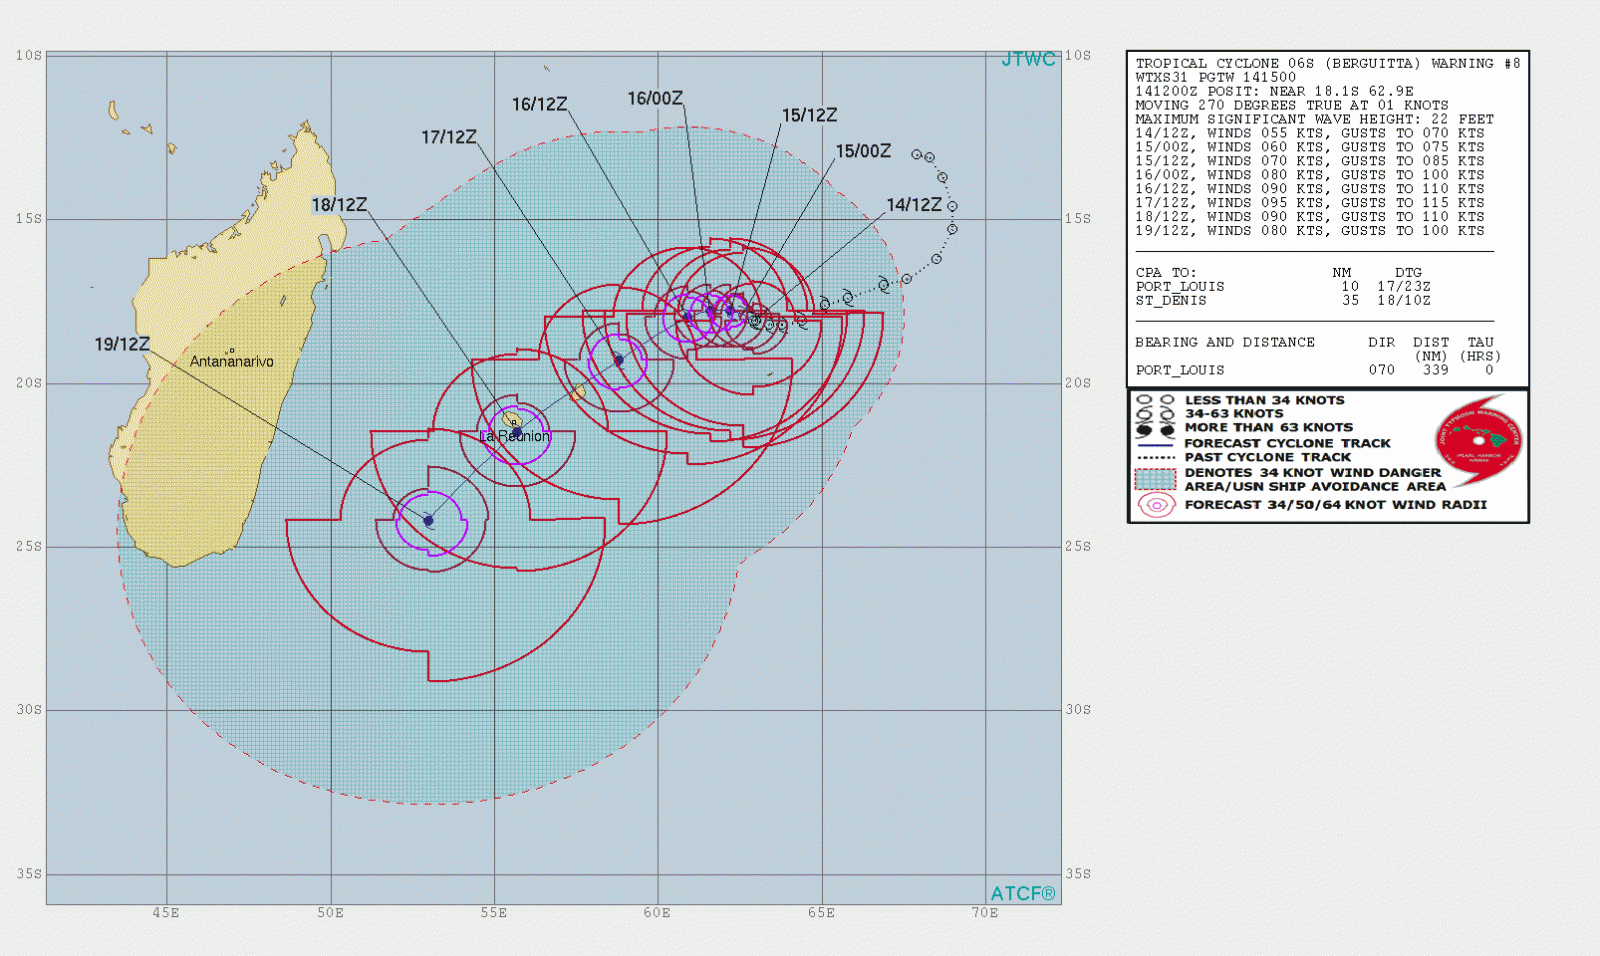 Tropical Cyclone Berguitta JTWC forecast track 15:00 UTC, January 14, 2018